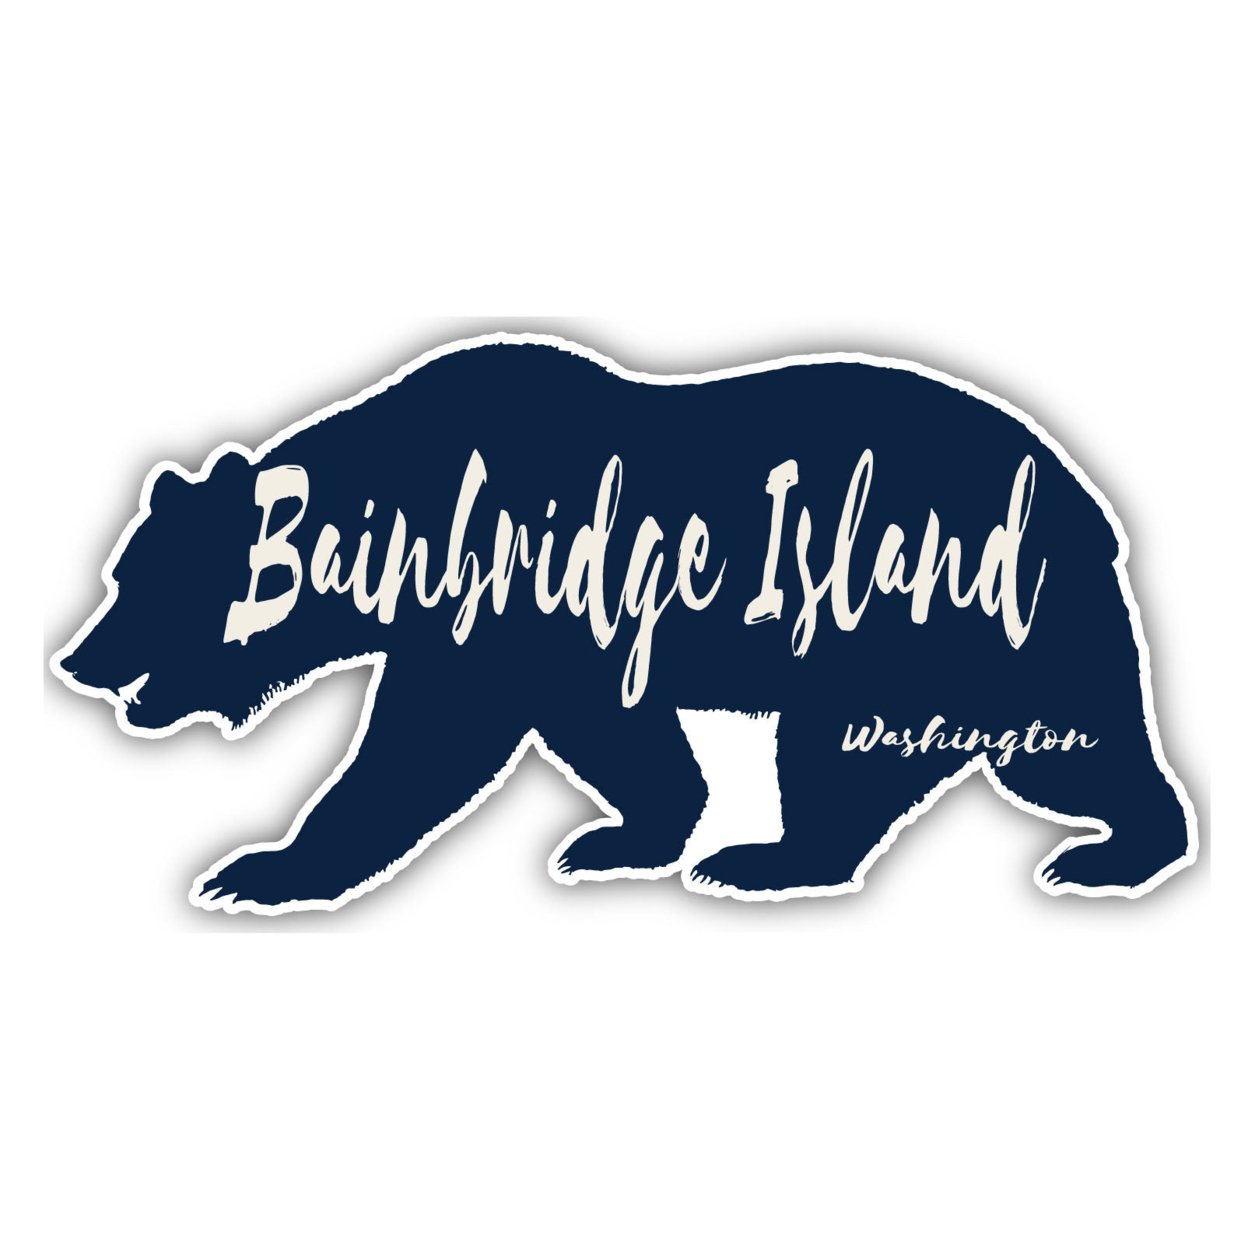 Bainbridge Island Washington Souvenir Decorative Stickers (Choose Theme And Size) - 4-Pack, 8-Inch, Tent